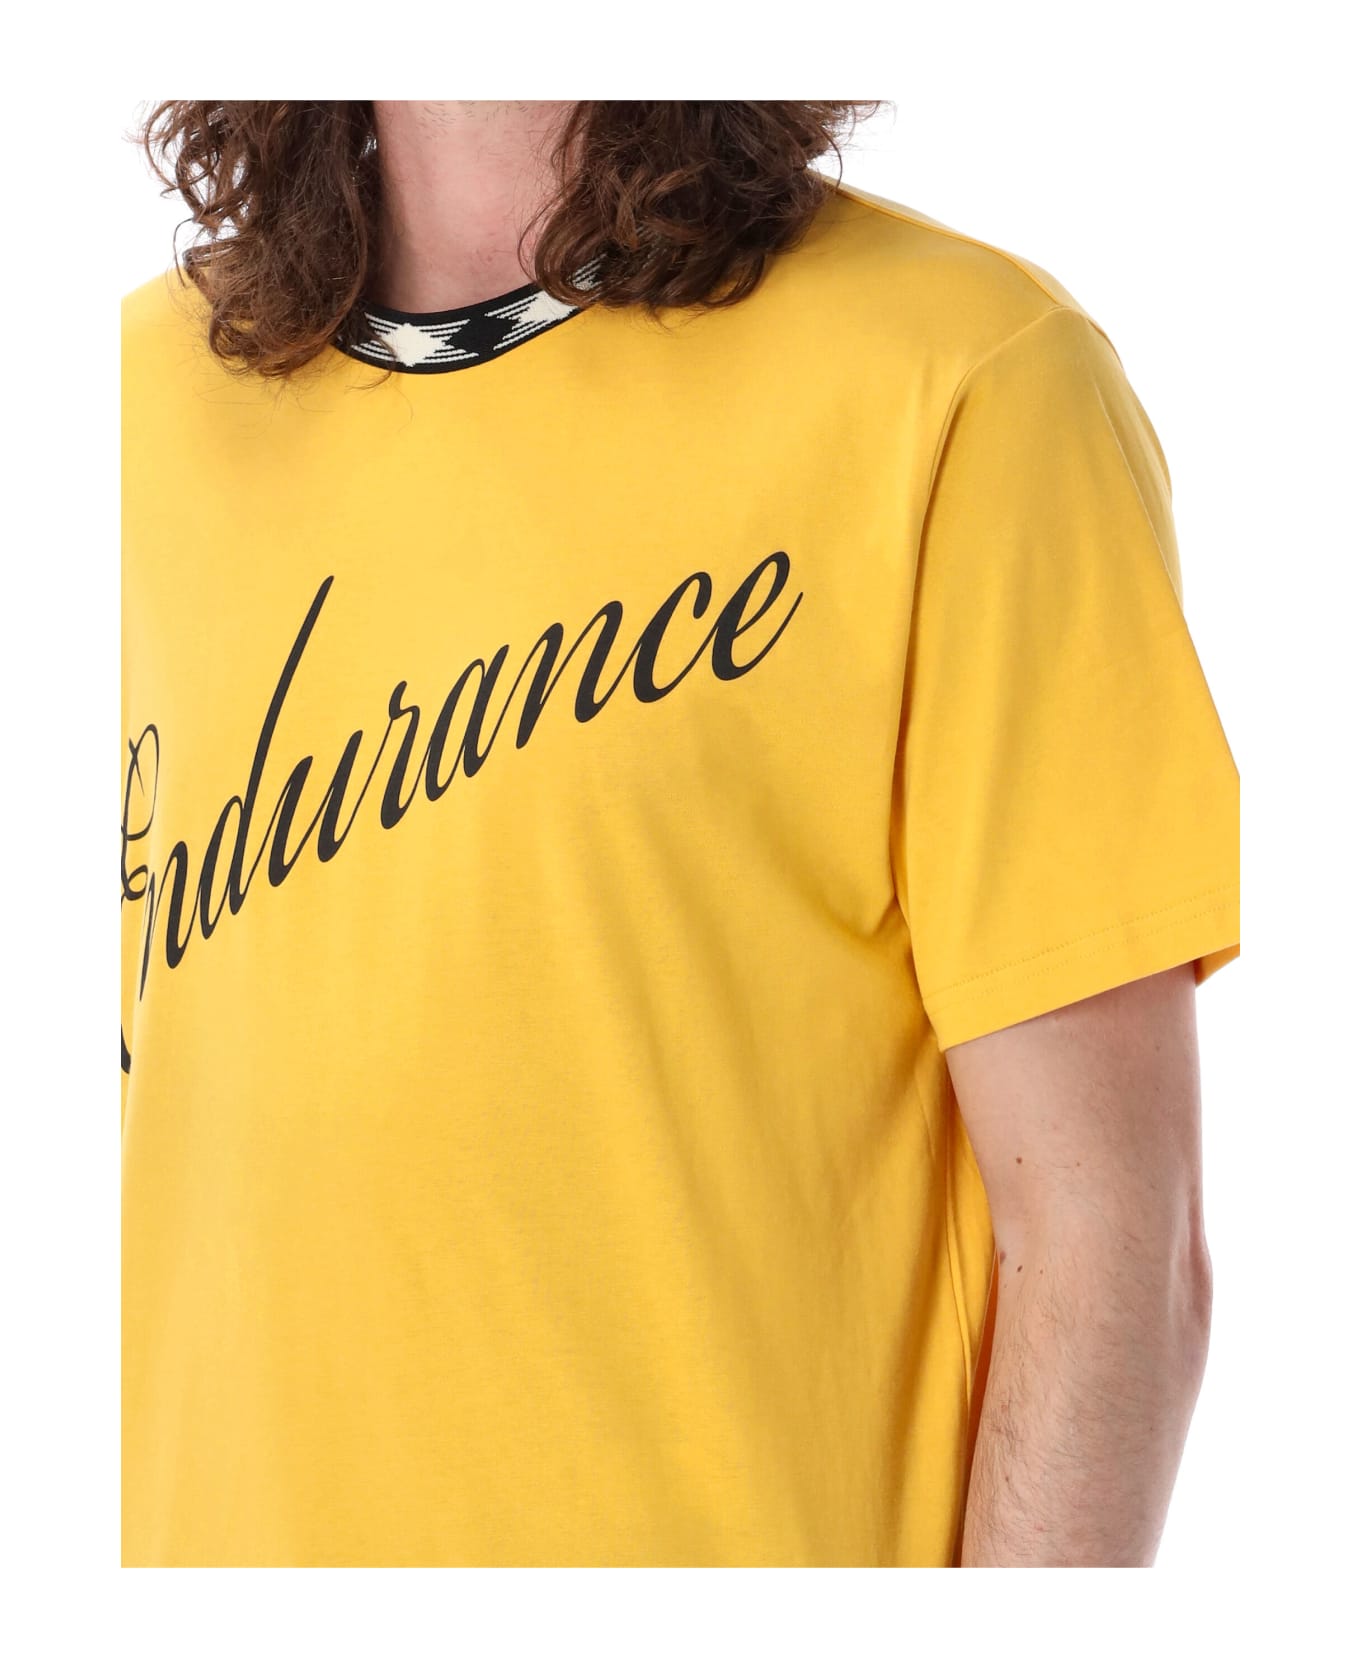 Wales Bonner Endurance T-shirt - TURMERIC